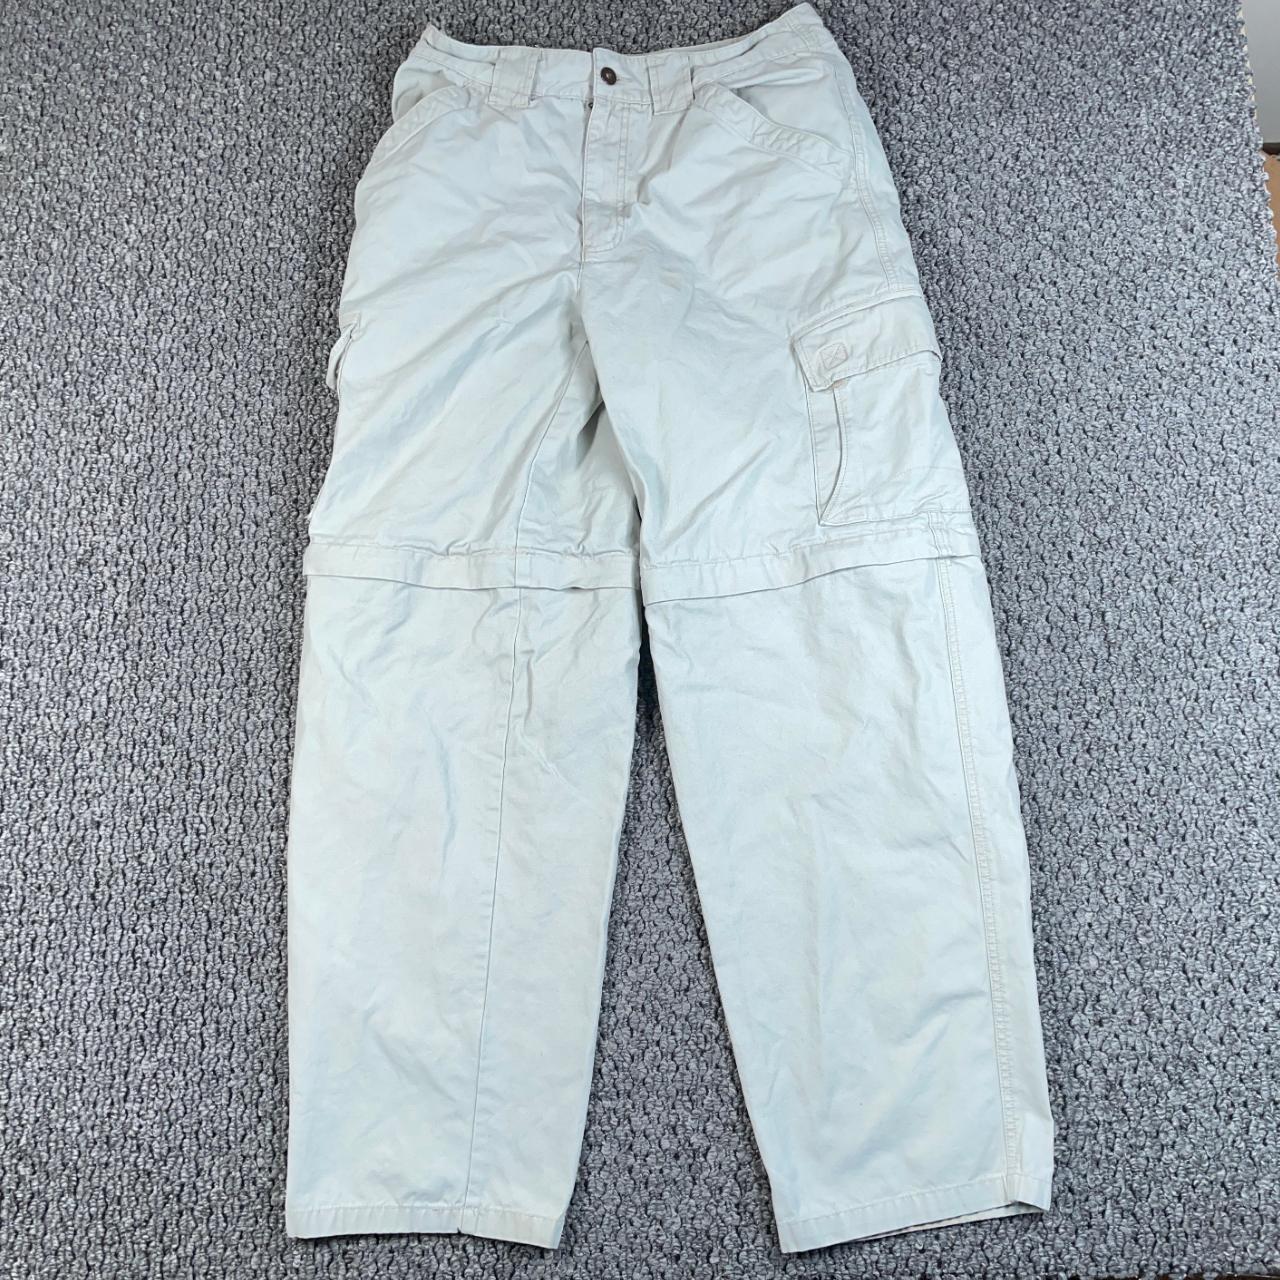 Men's Vintage Brown Faded Glory Cargo Pants Size 38x32 #D | eBay